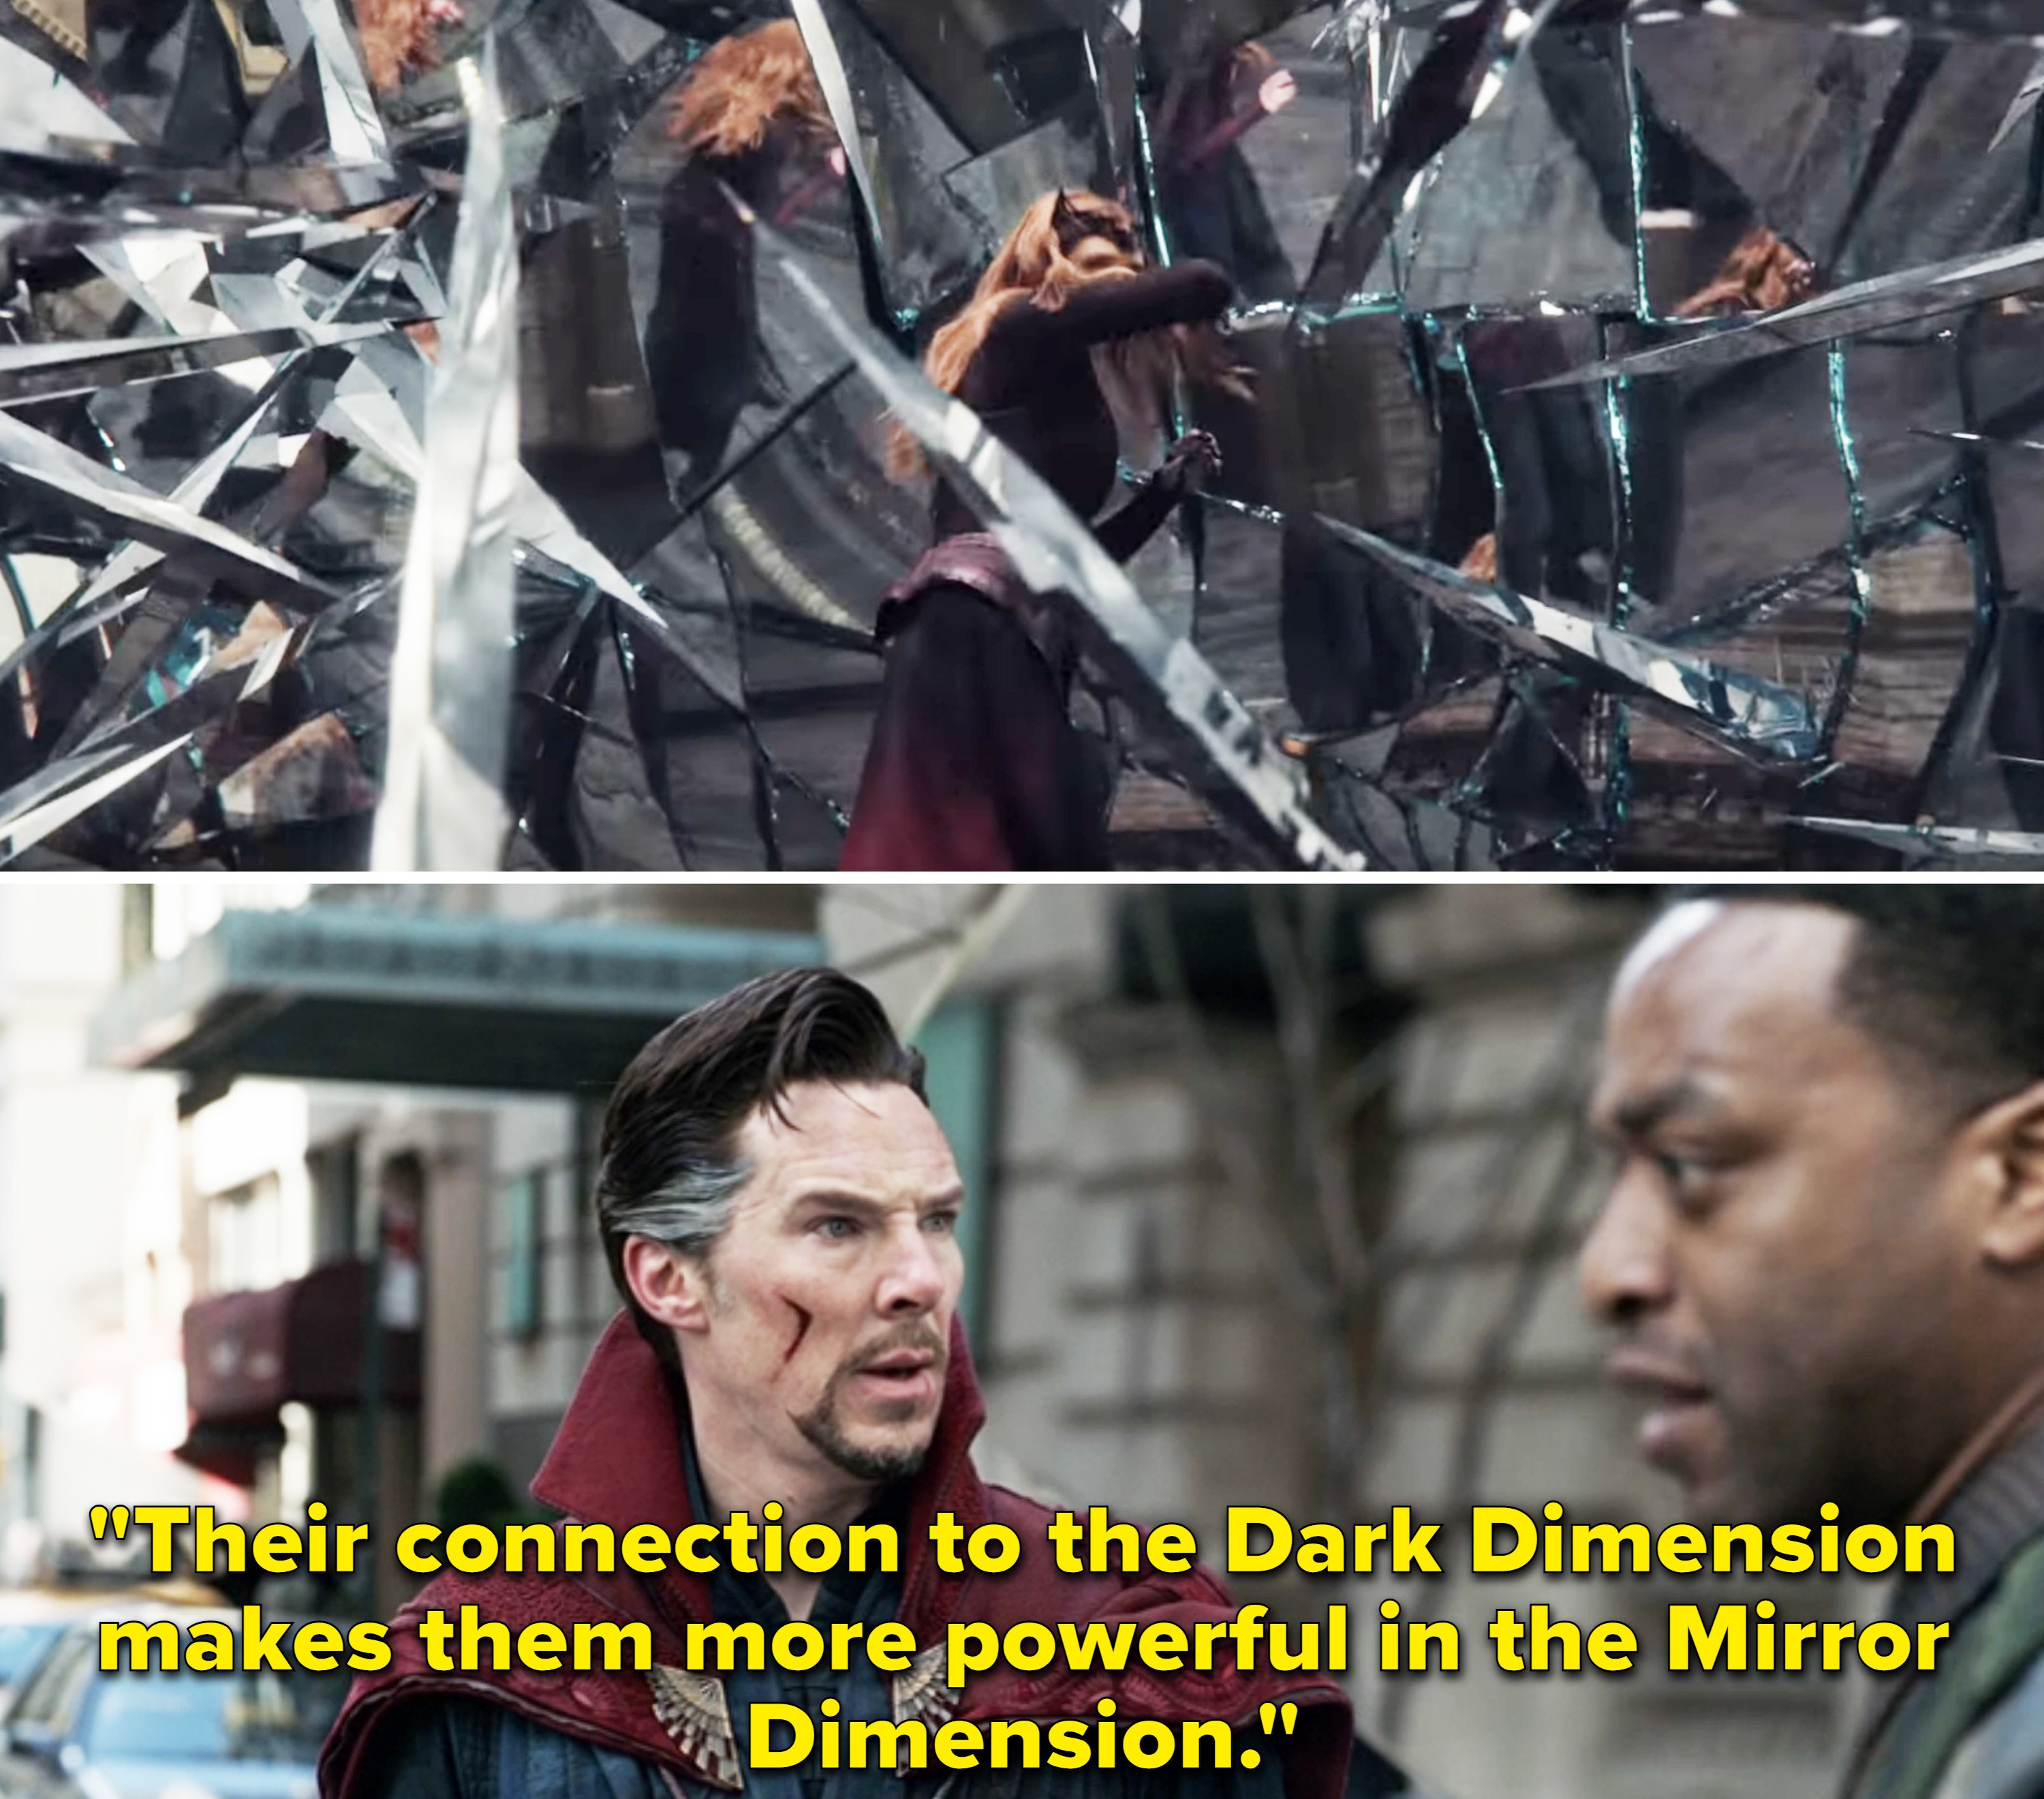 The Mirror Dimension; Doctor Strange explaining it